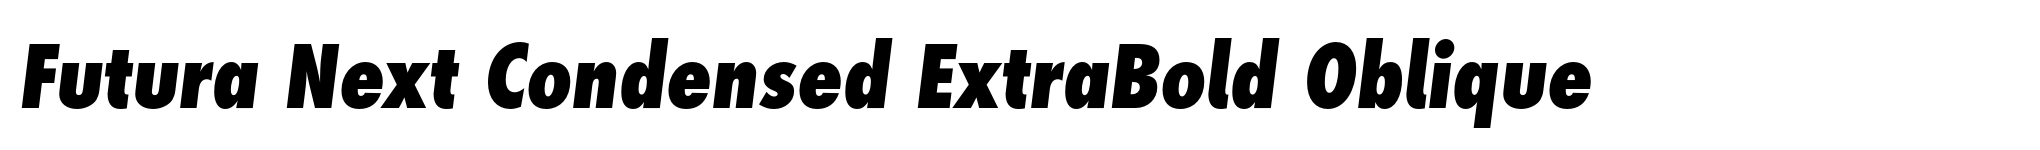 Futura Next Condensed ExtraBold Oblique image